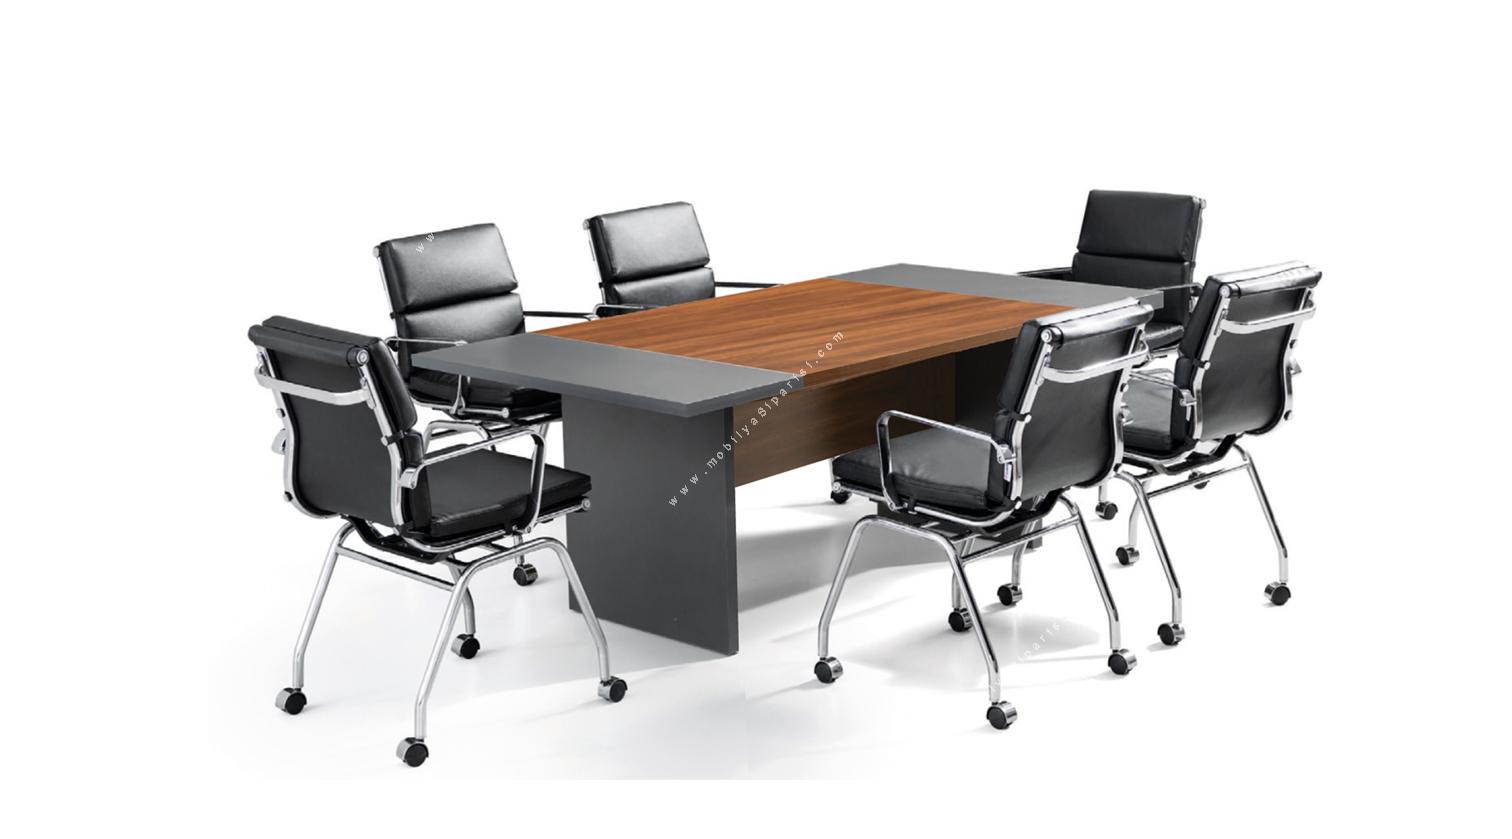 efow ahşap çift renkli toplantı masası 160cm